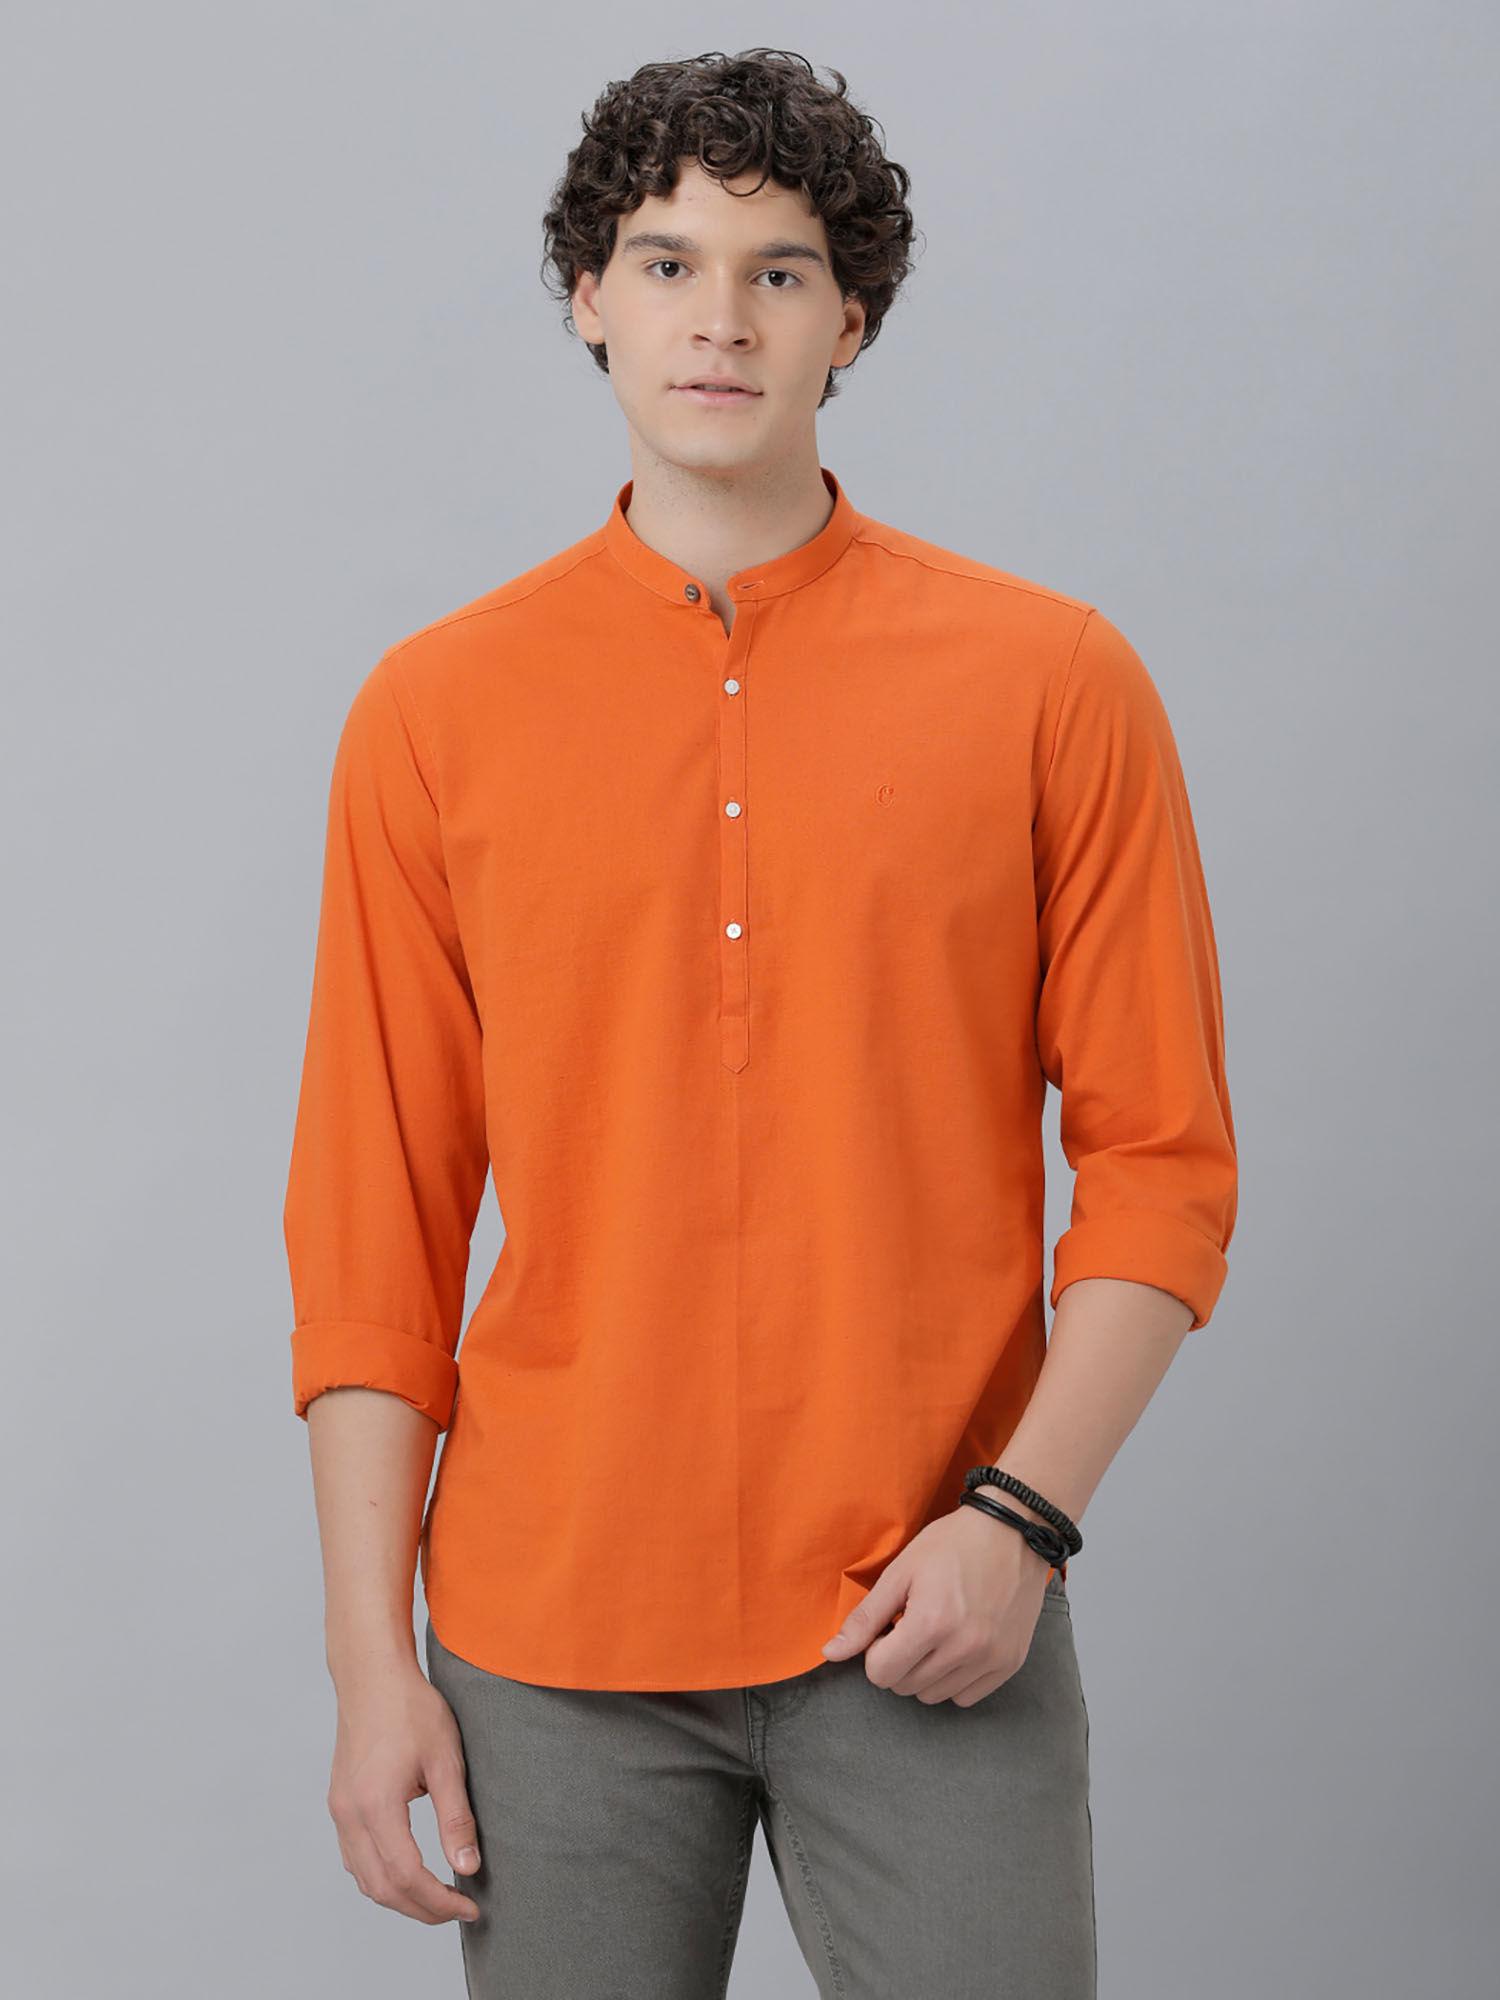 men's-cotton-linen-orange-solid-slim-fit-full-sleeve-casual-shirt